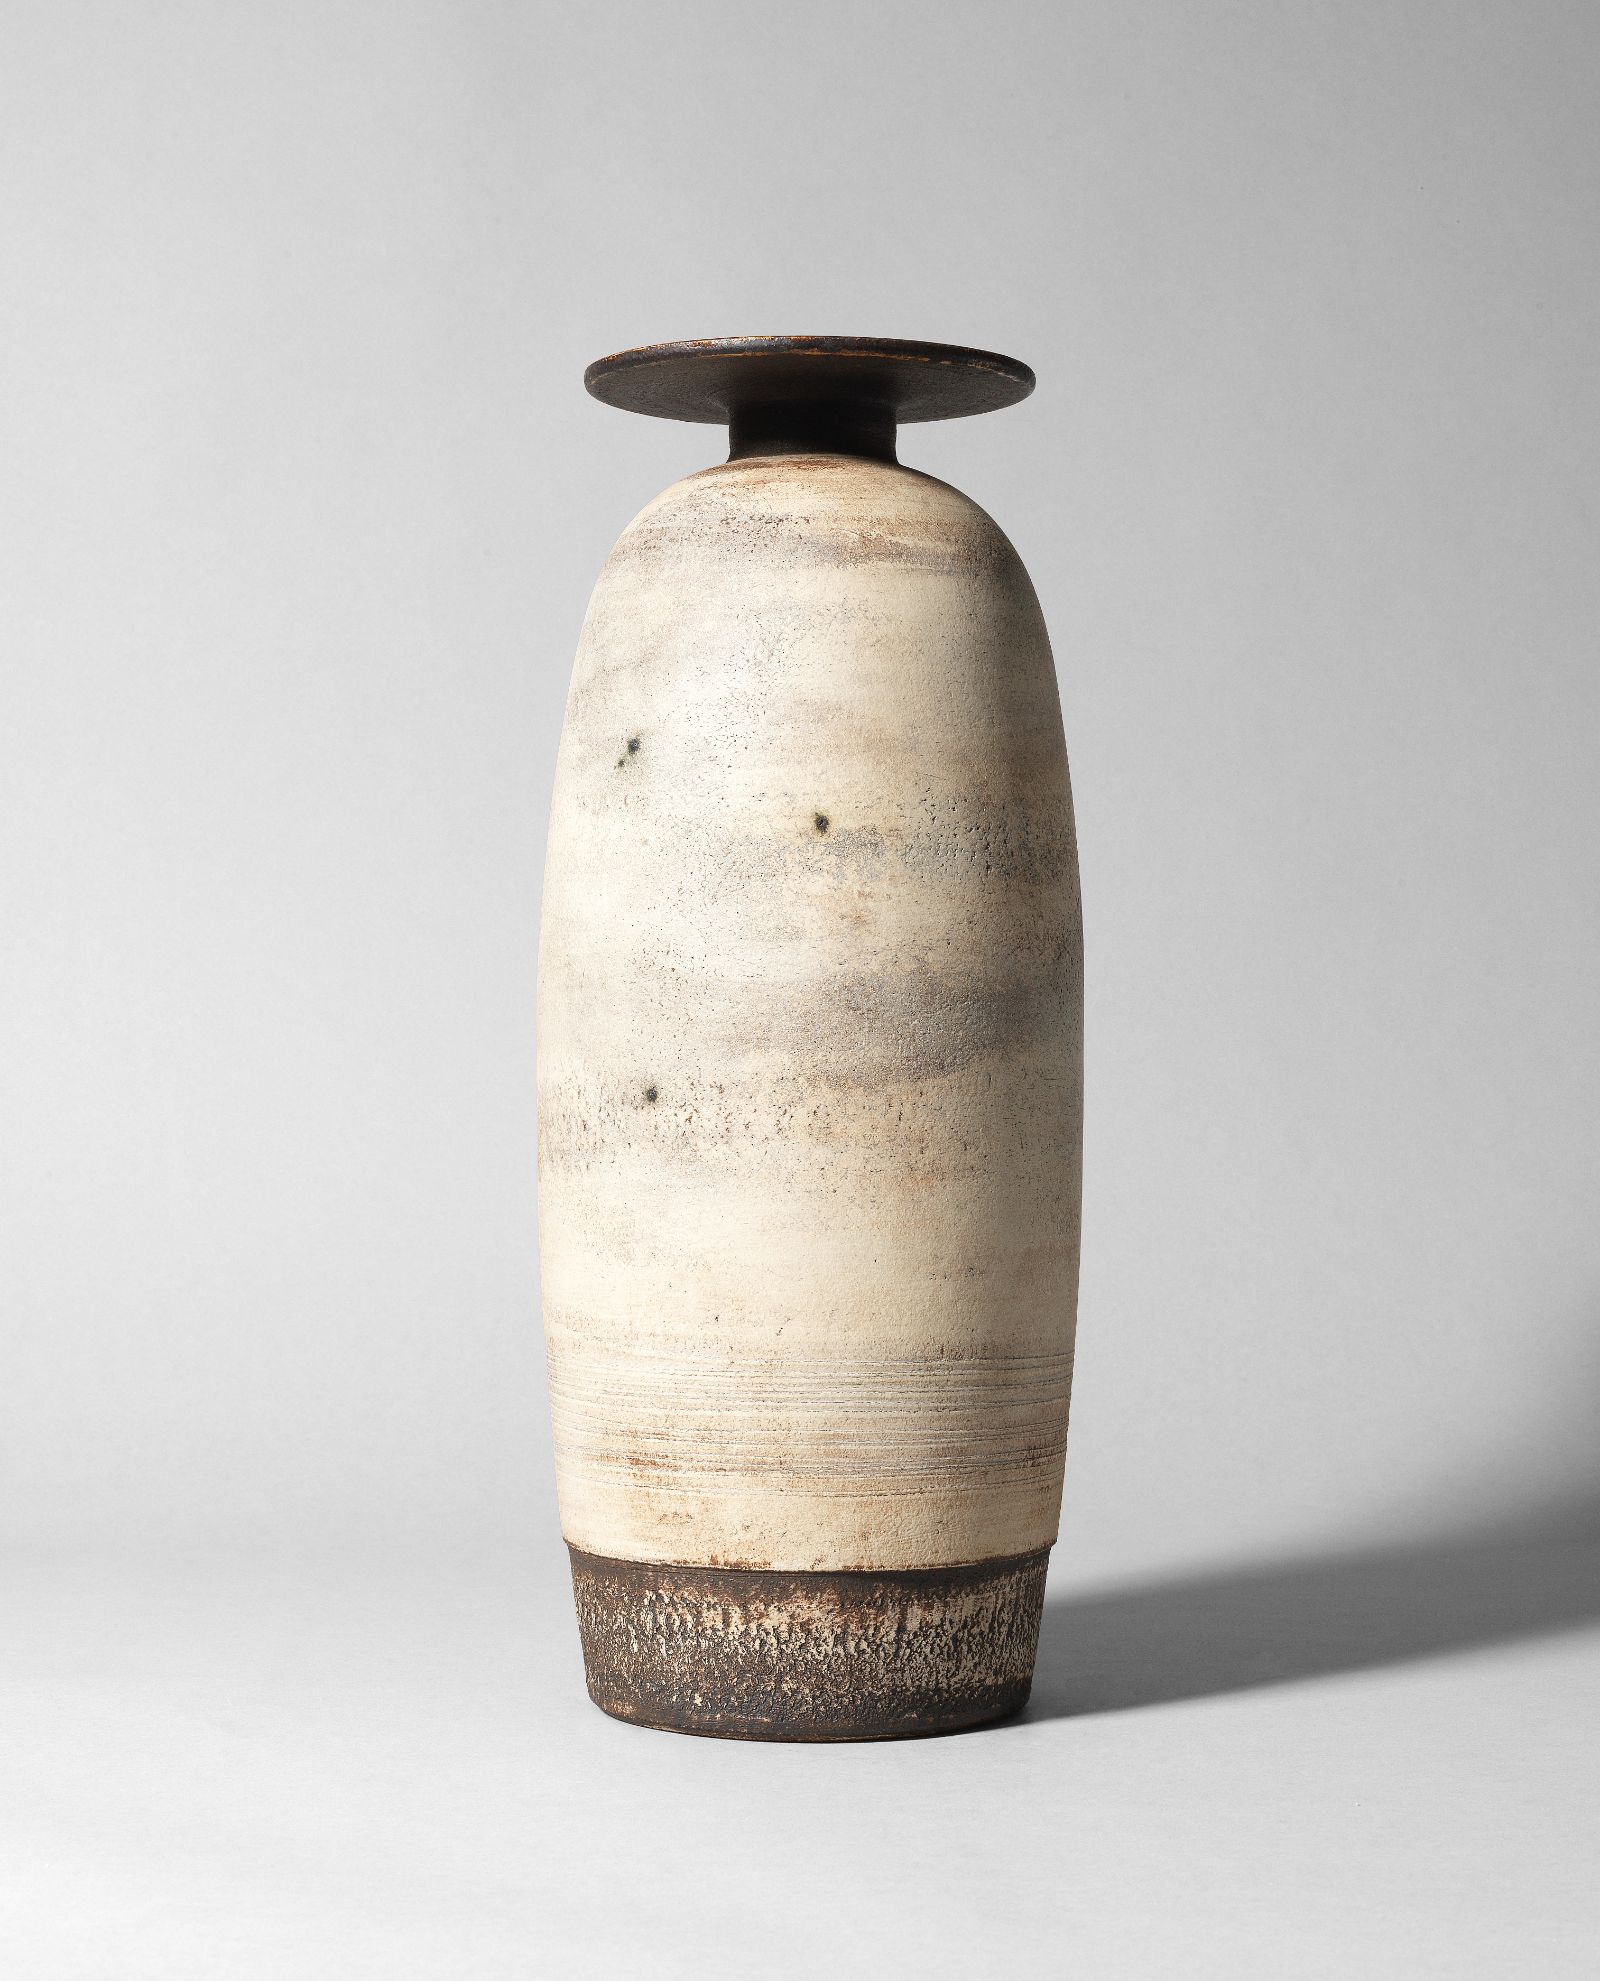 Hans Coper, ‘Tall bottle vase with disc’, circa 1968. (Lot 41, estimate £80,000-120,000, sold for £655,500 inc. premium) COURTESY: Bonhams